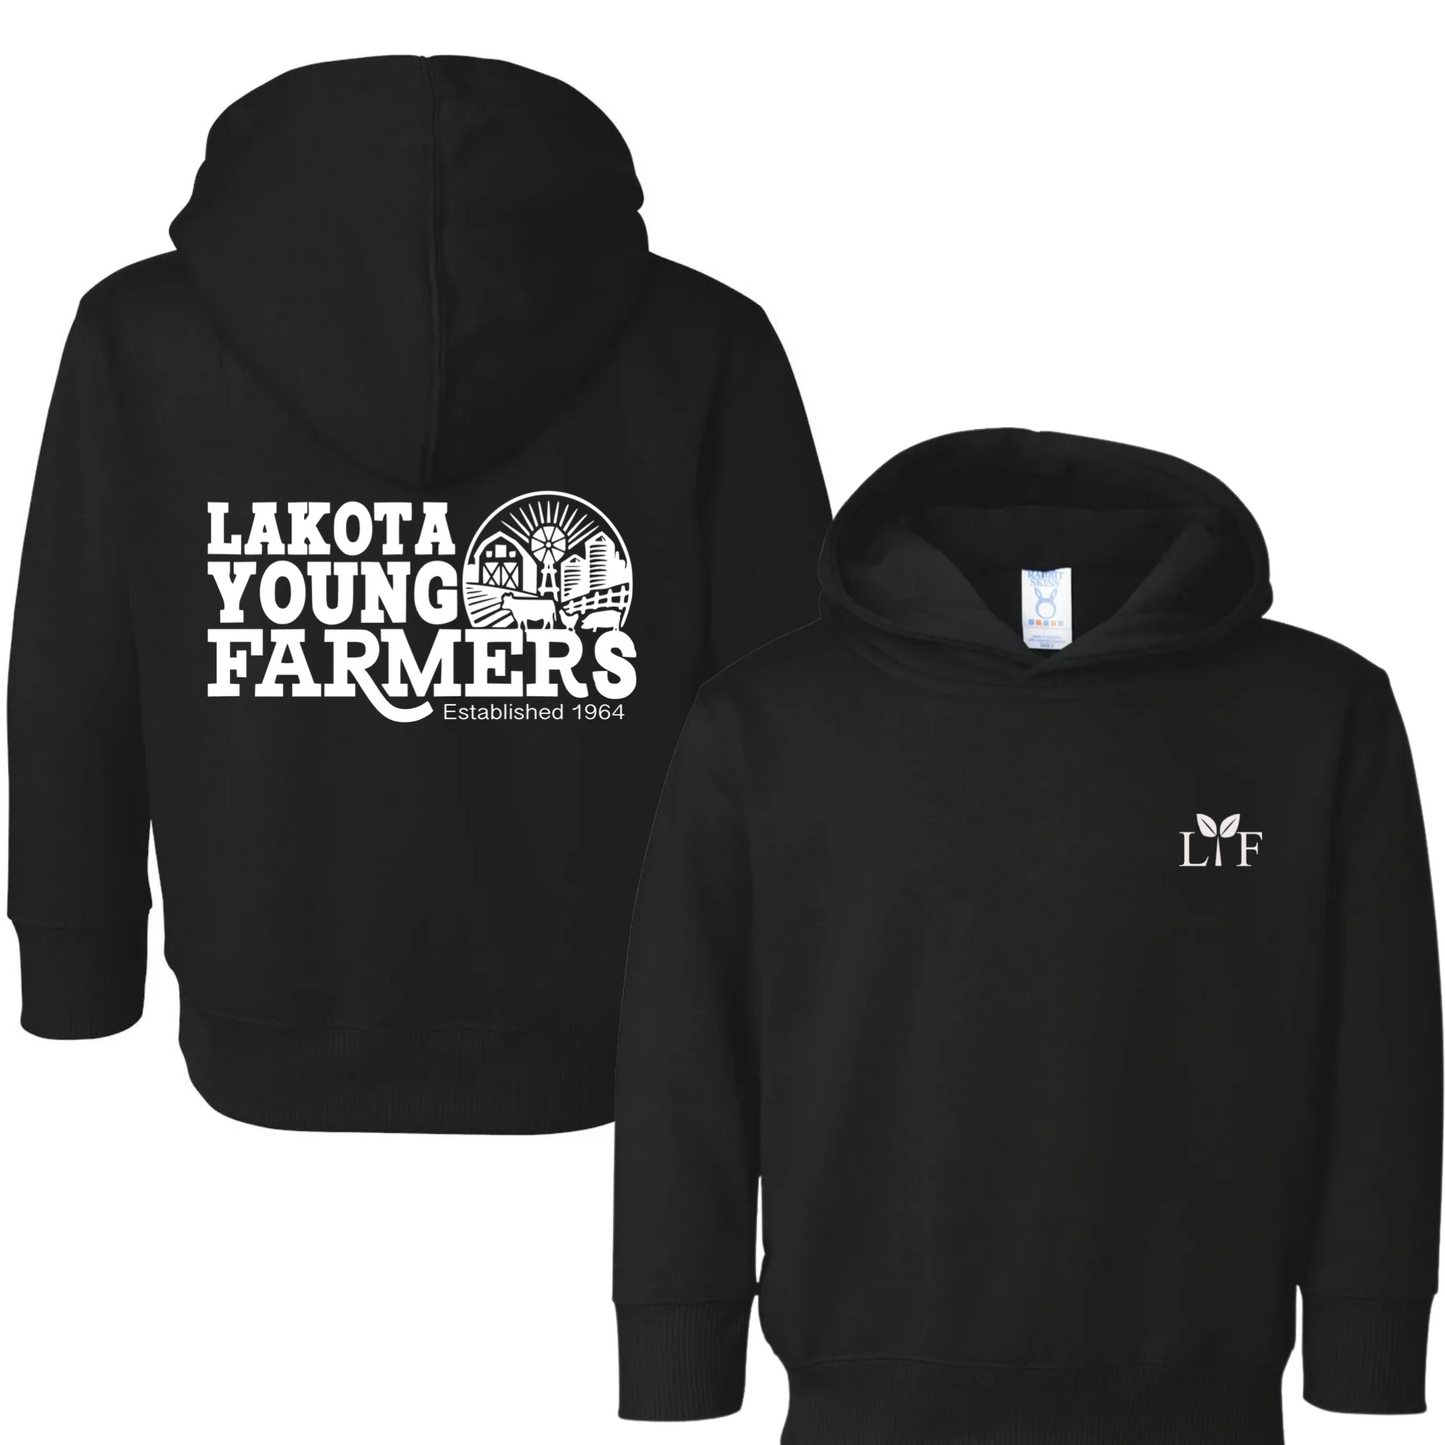 Lakota Young Farmers Toddler Size Hoodies and Sweatshirts